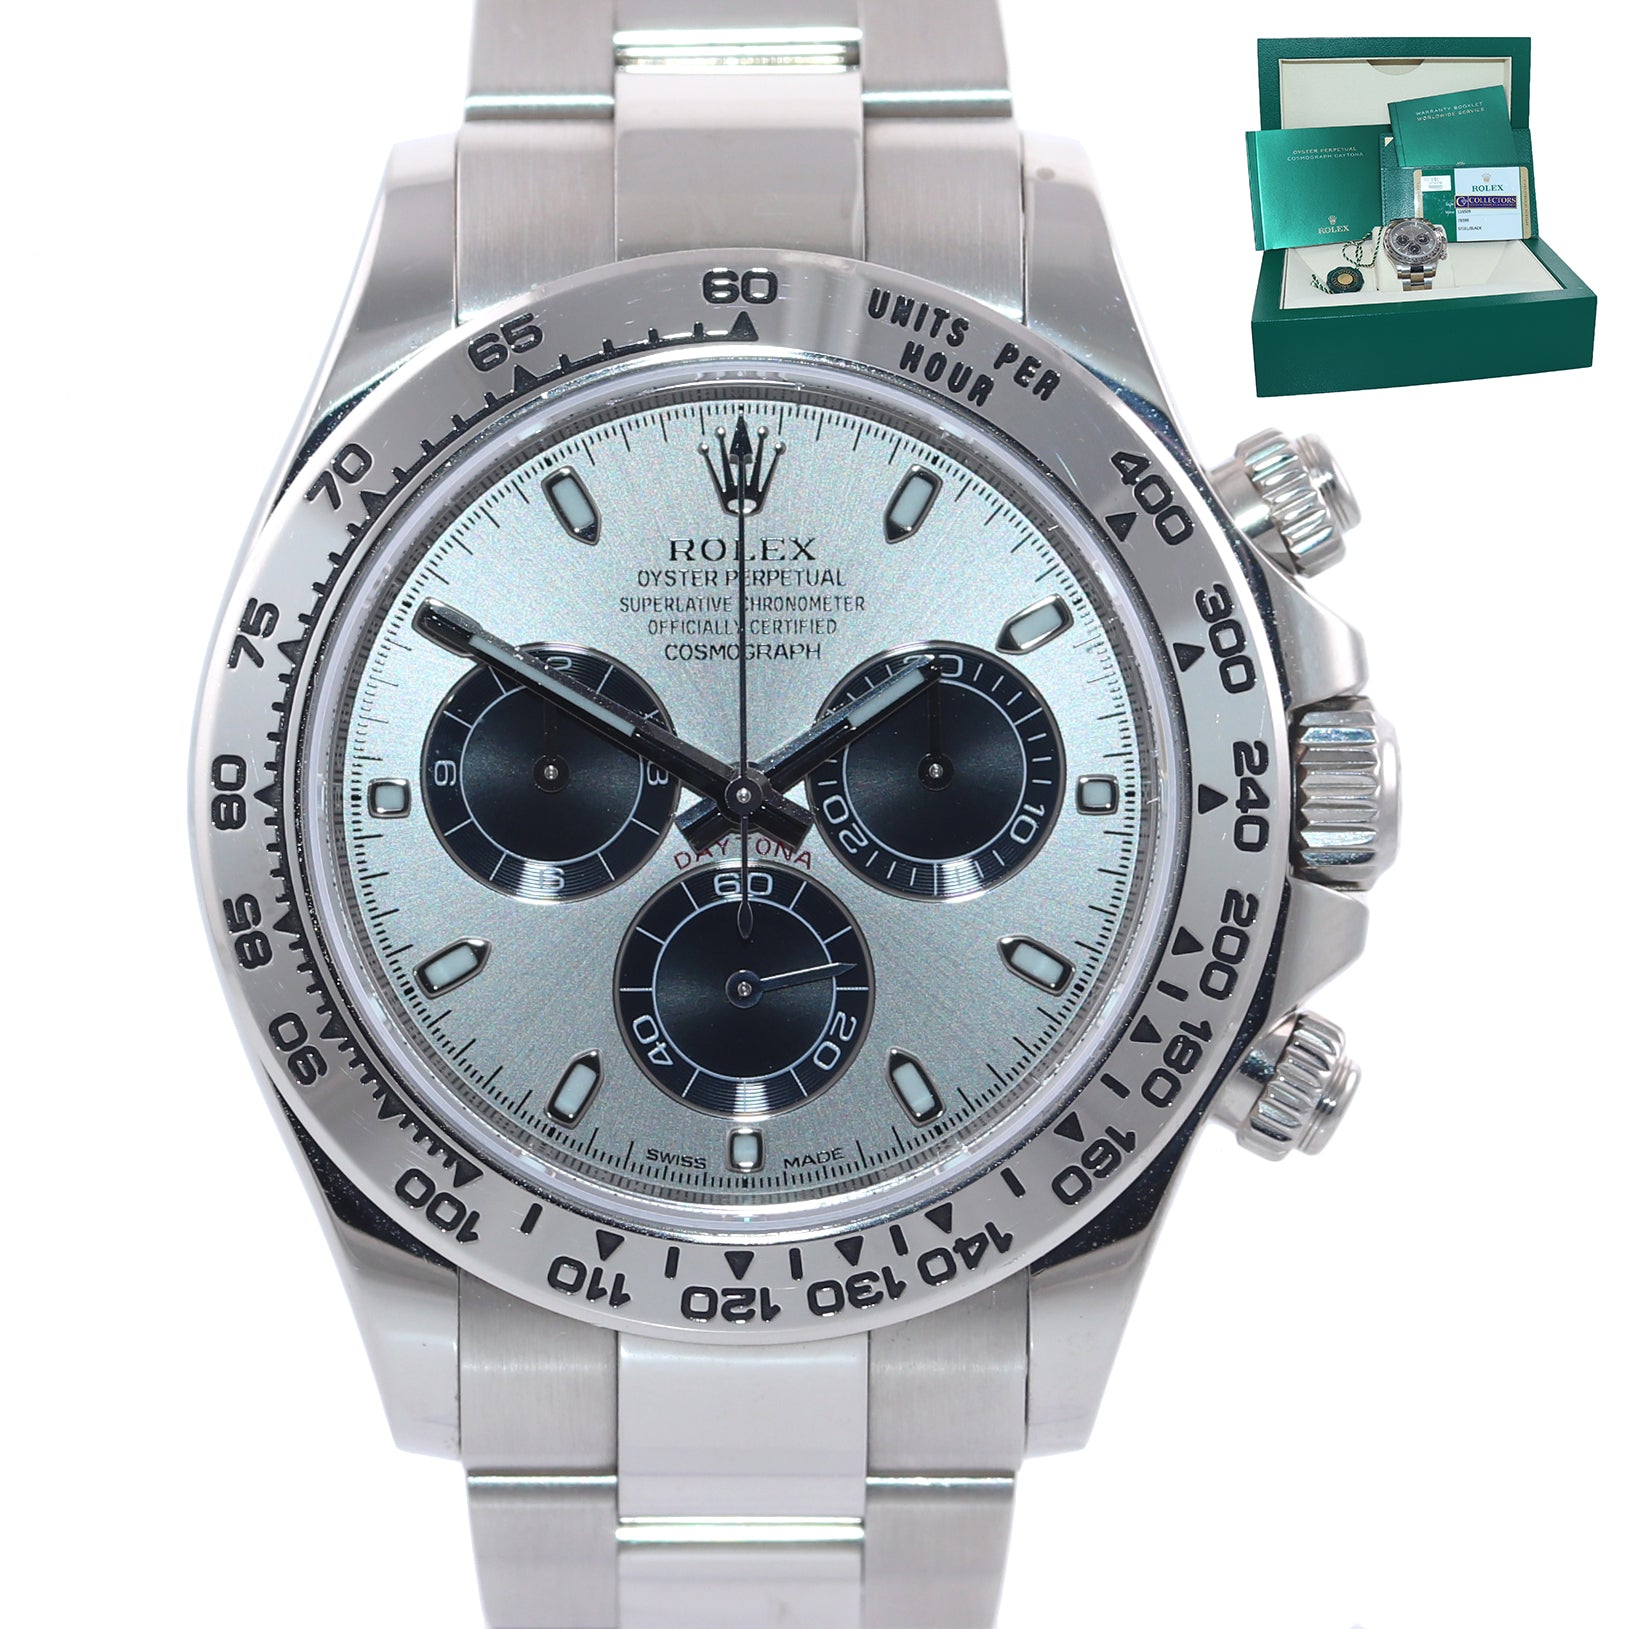 Mint 2018 PAPERS Rolex Daytona Silver Black Panda Dial 116509 White Gold Watch